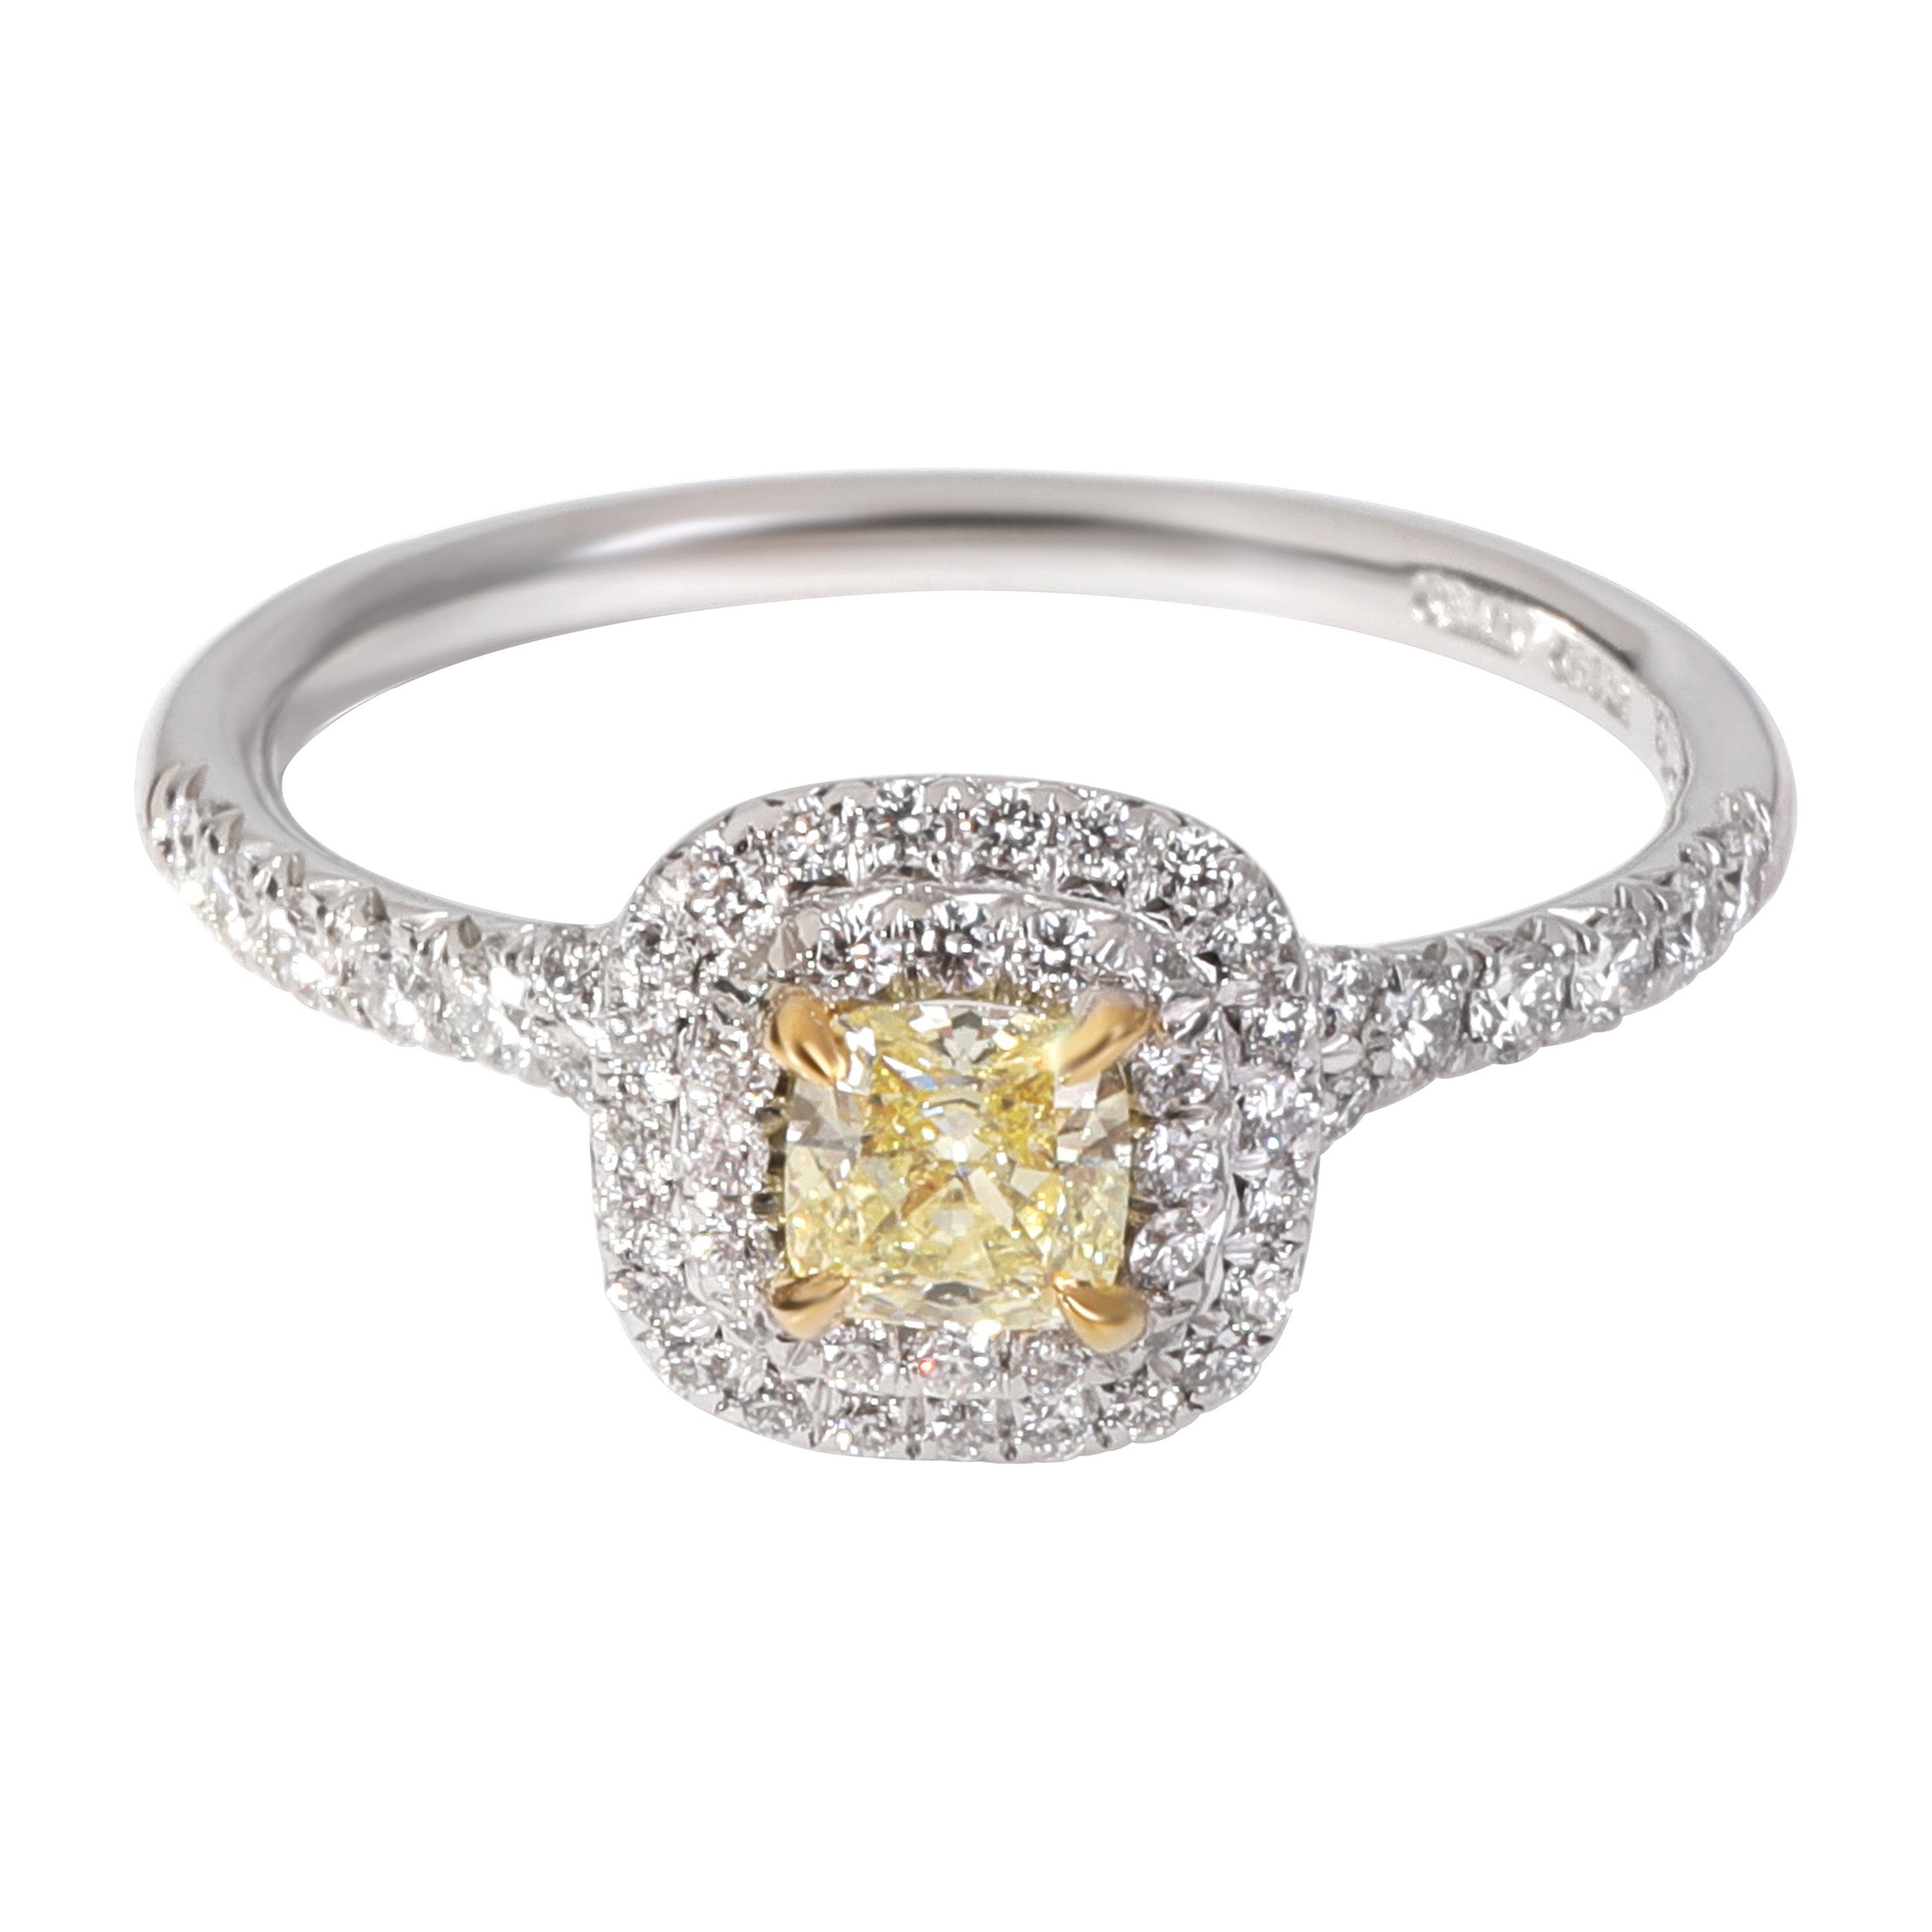 Tiffany & Co. Soleste Fancy Yellow Diamond Engagement Ring in Platinum 0.56 Ctw